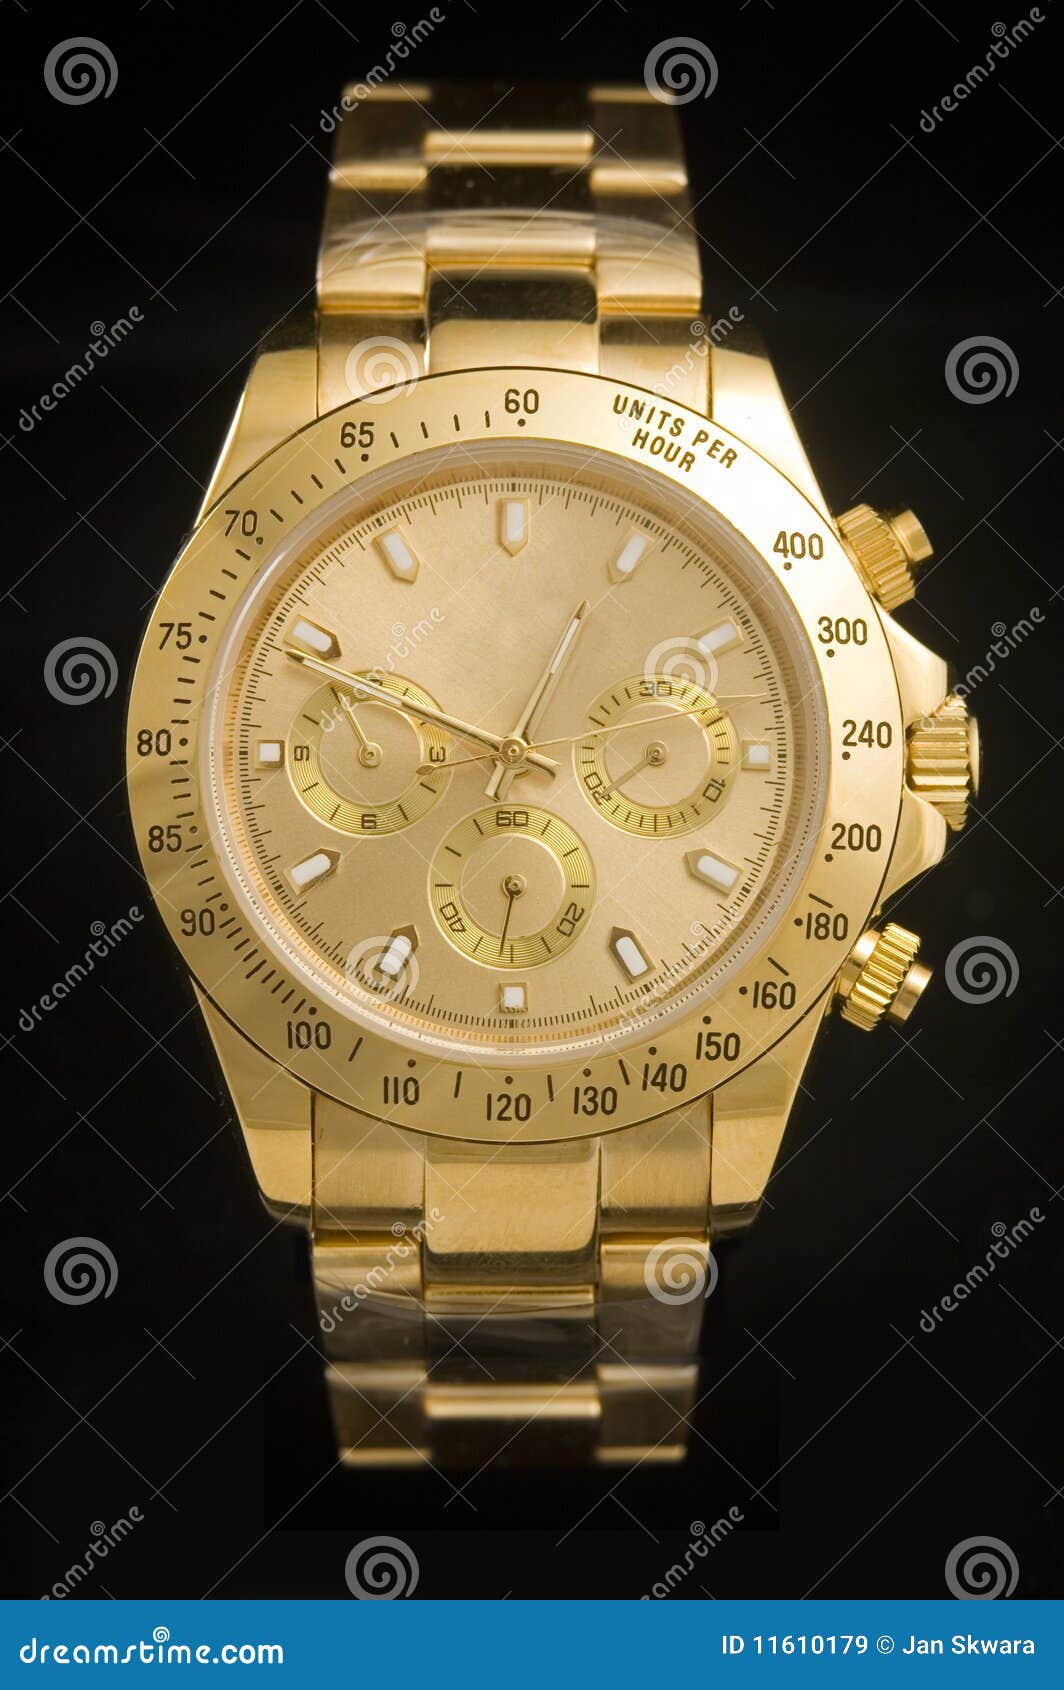 luxury gold watch